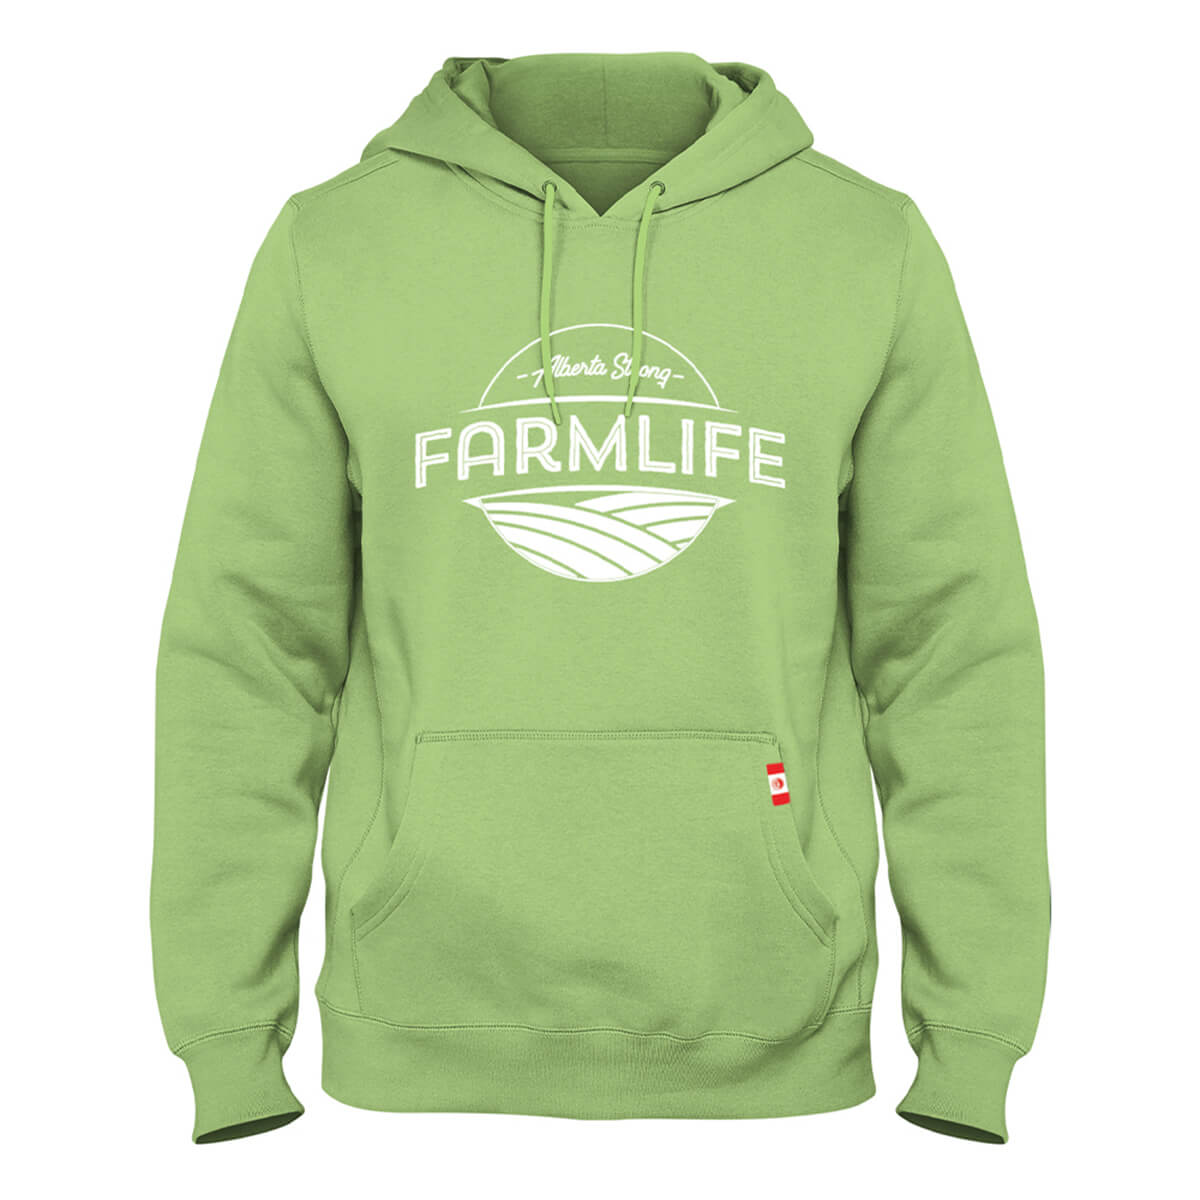 Farm Life Hoodie - Lime Green